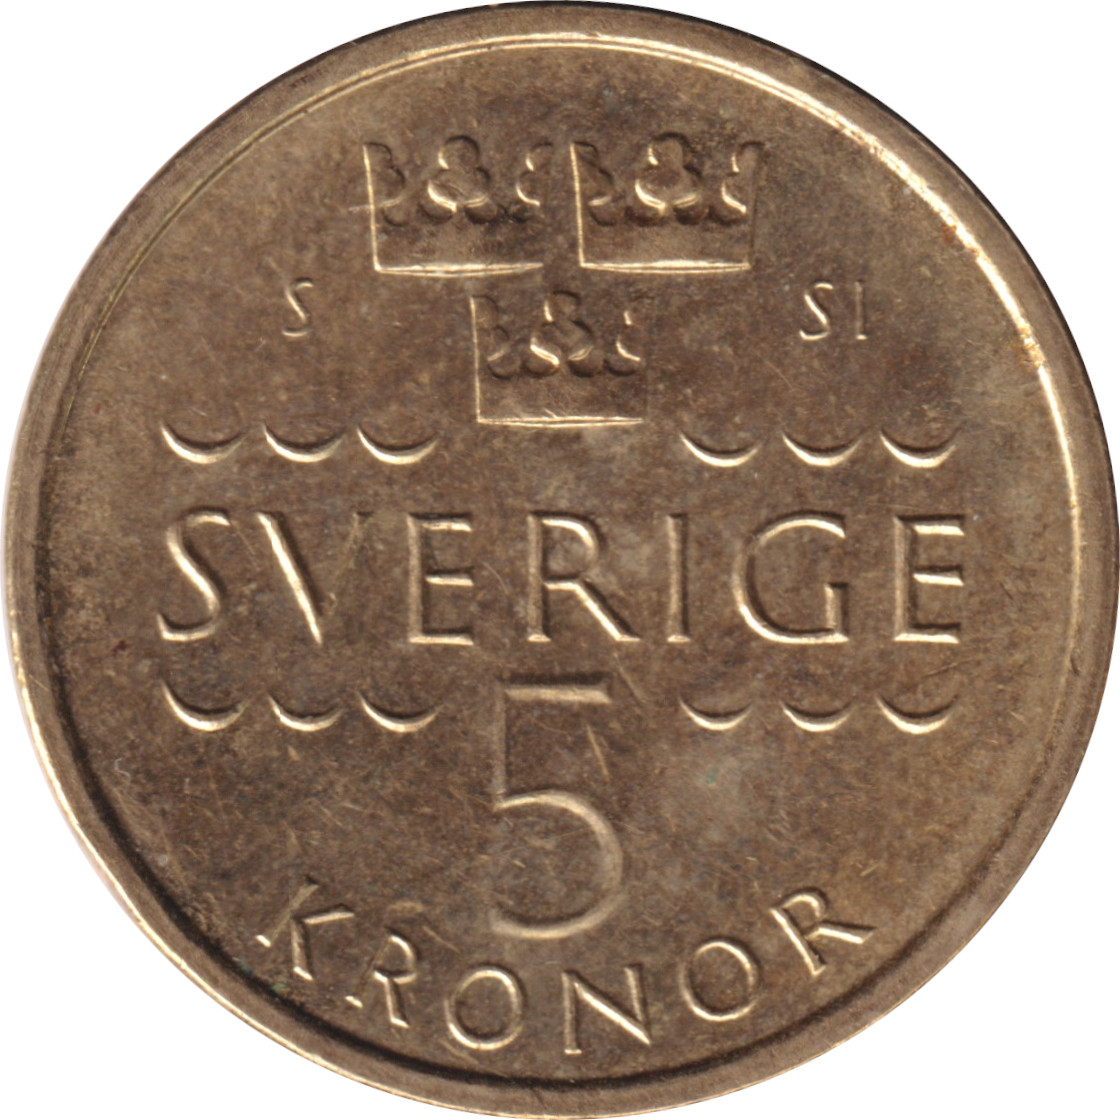 5 kronor - Charles XVI - Tête agée